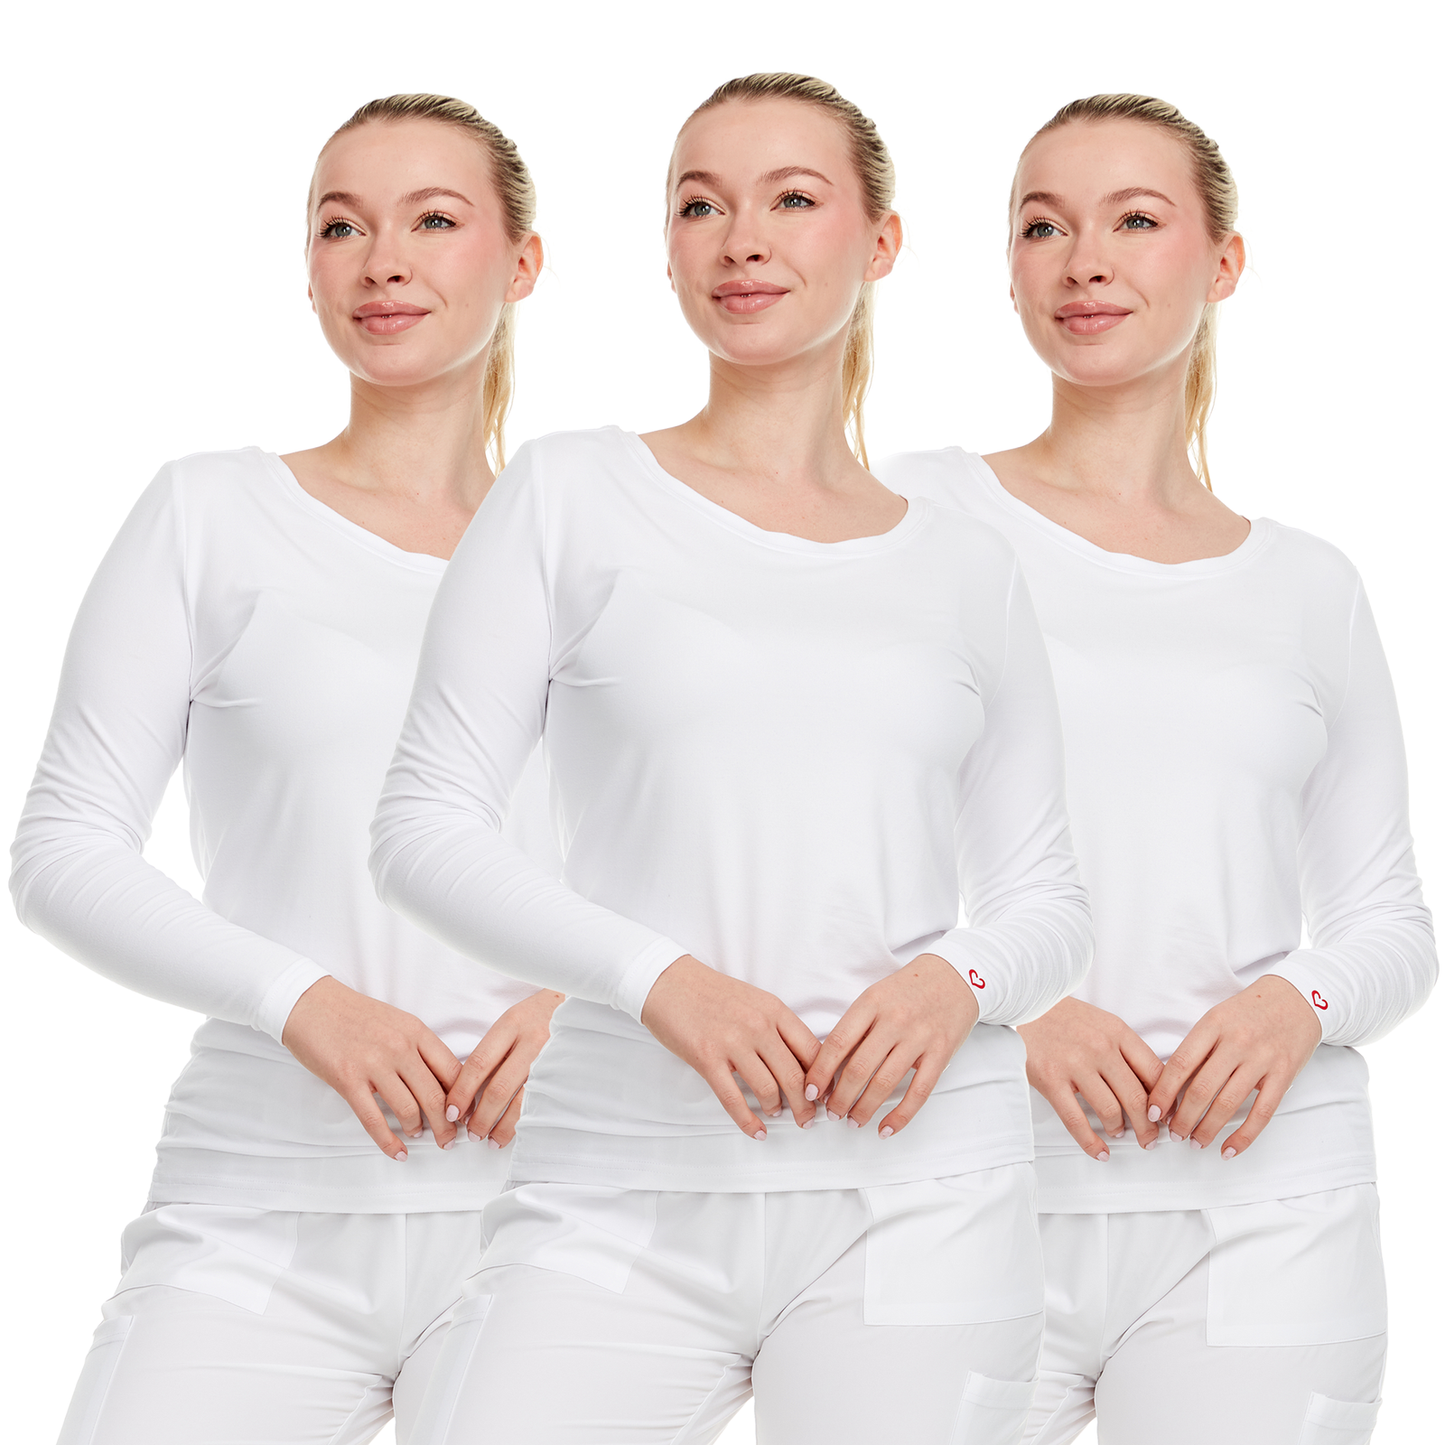 Heal Wear Scrubs for Women -  (3 packs) Long Sleeve Comfort Under Scrub Tee